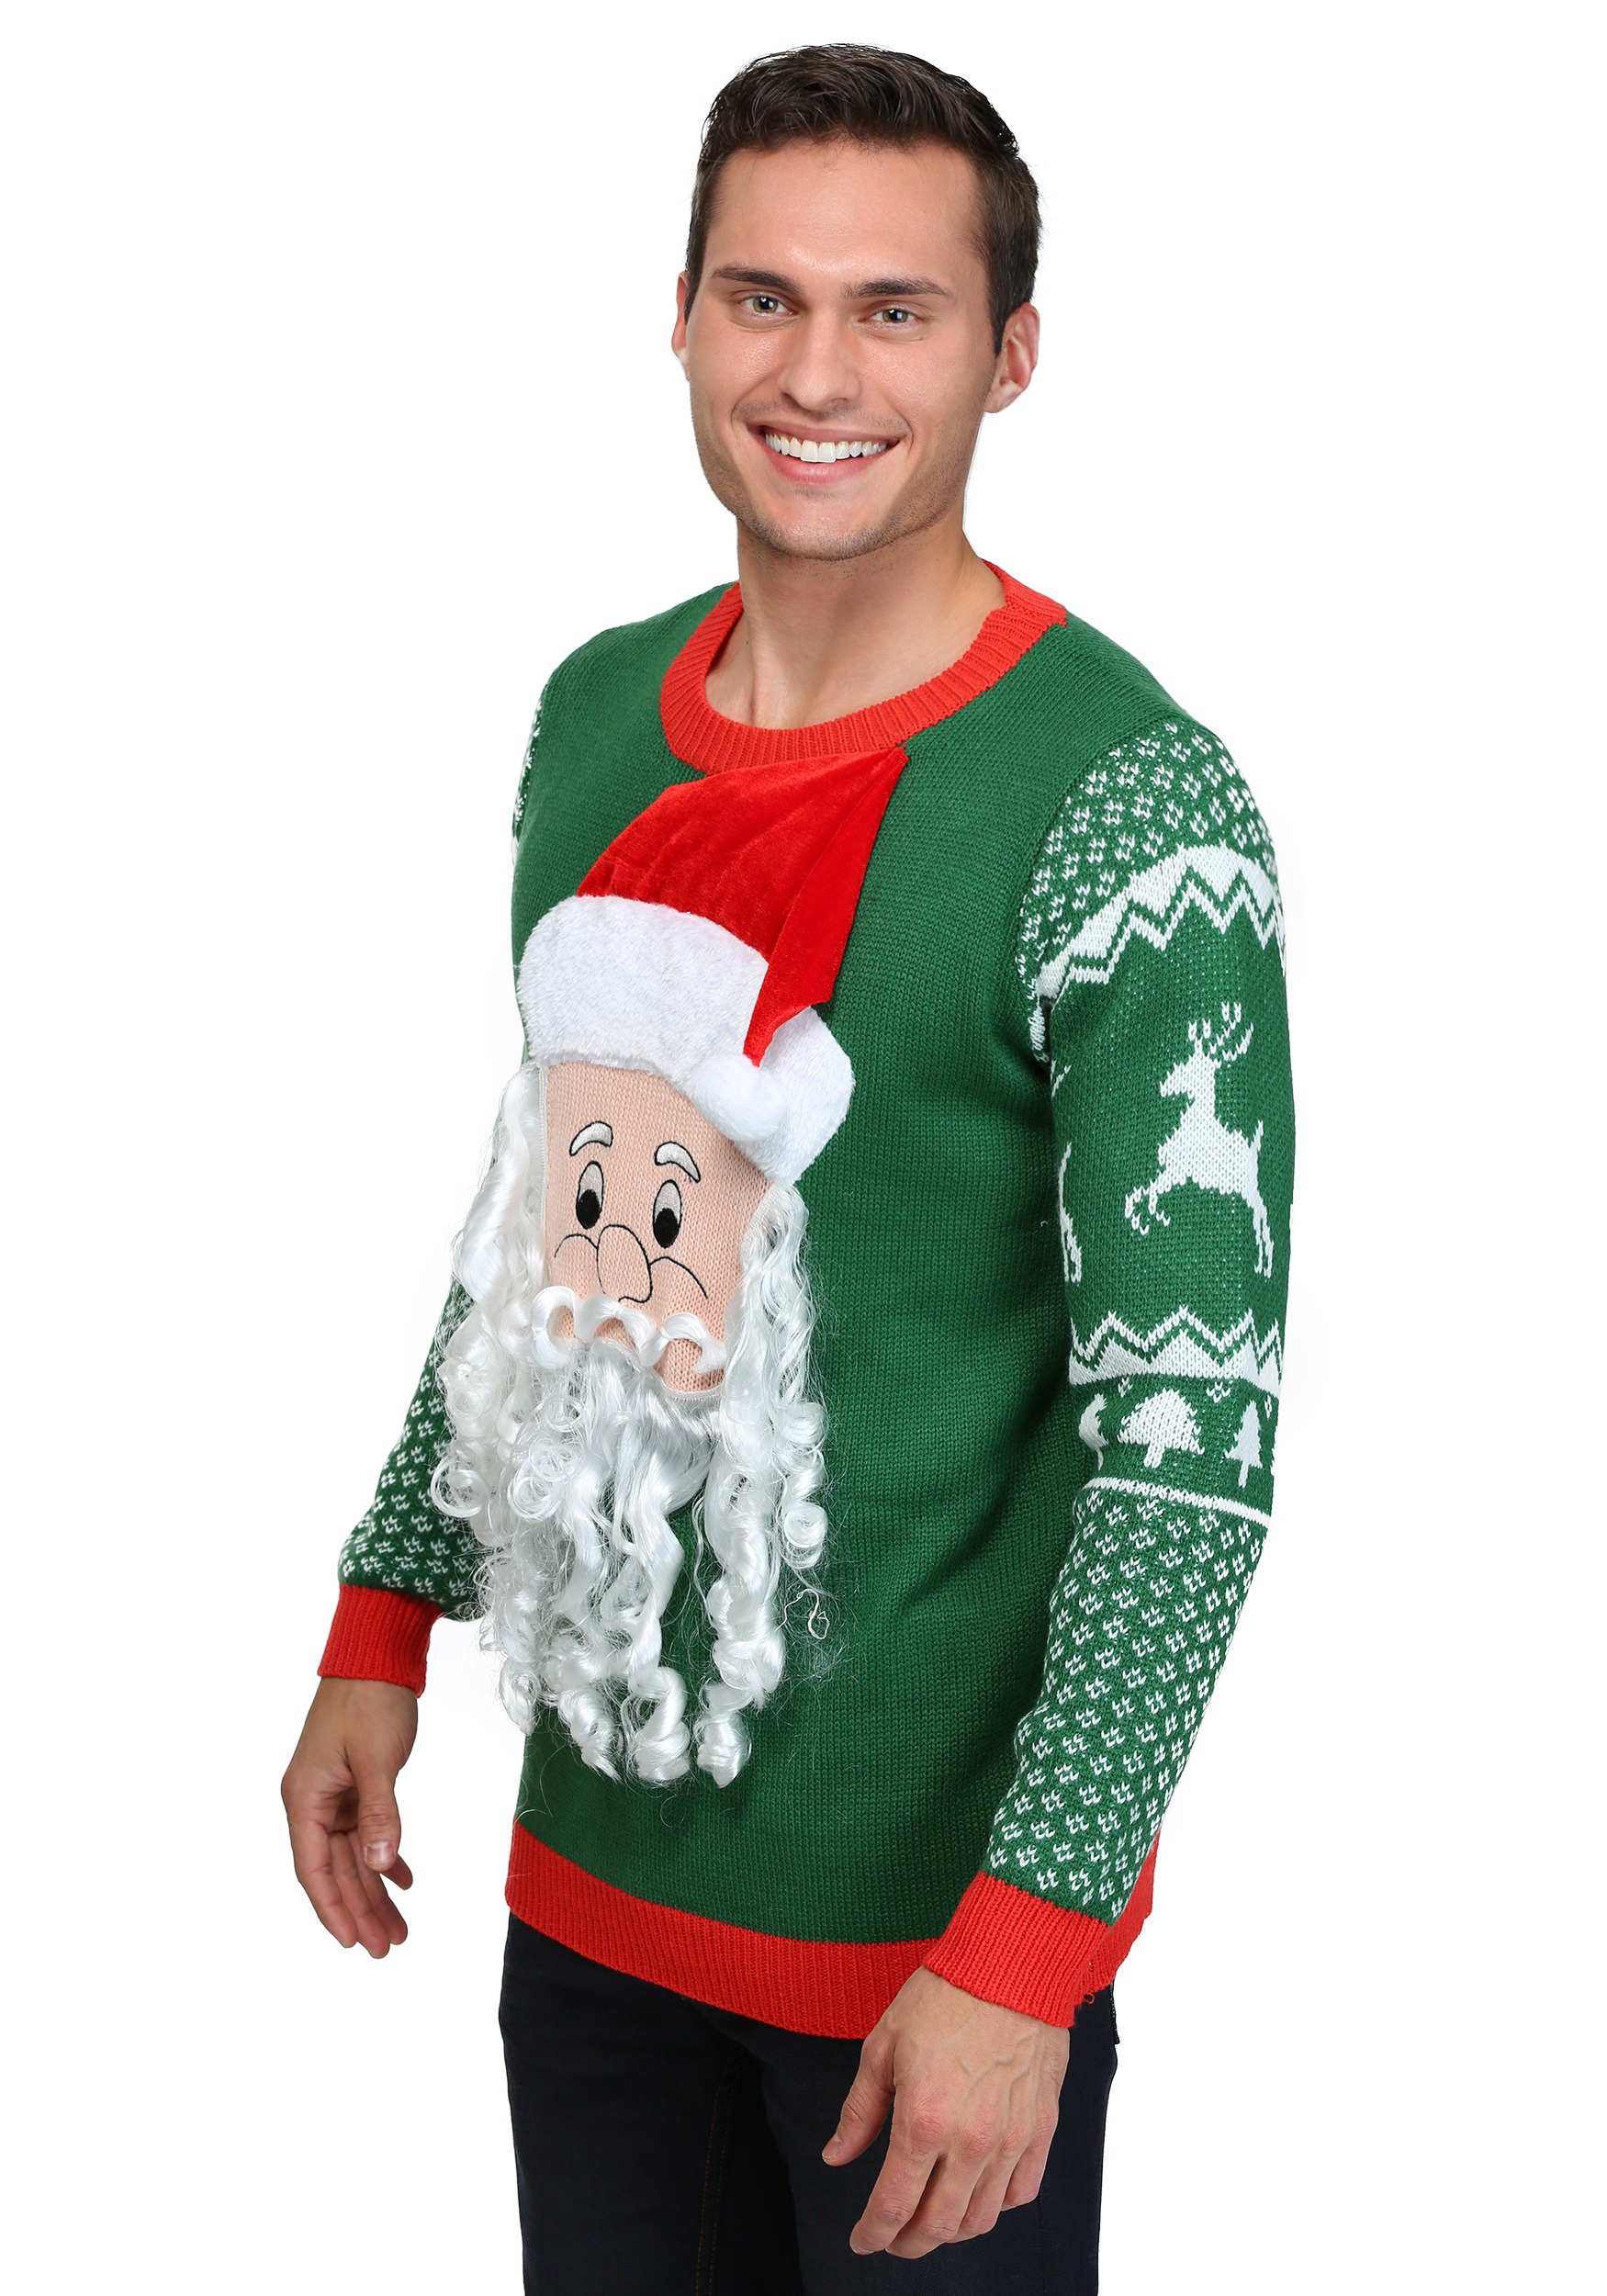 3D Santa Face Ugly Christmas Sweater